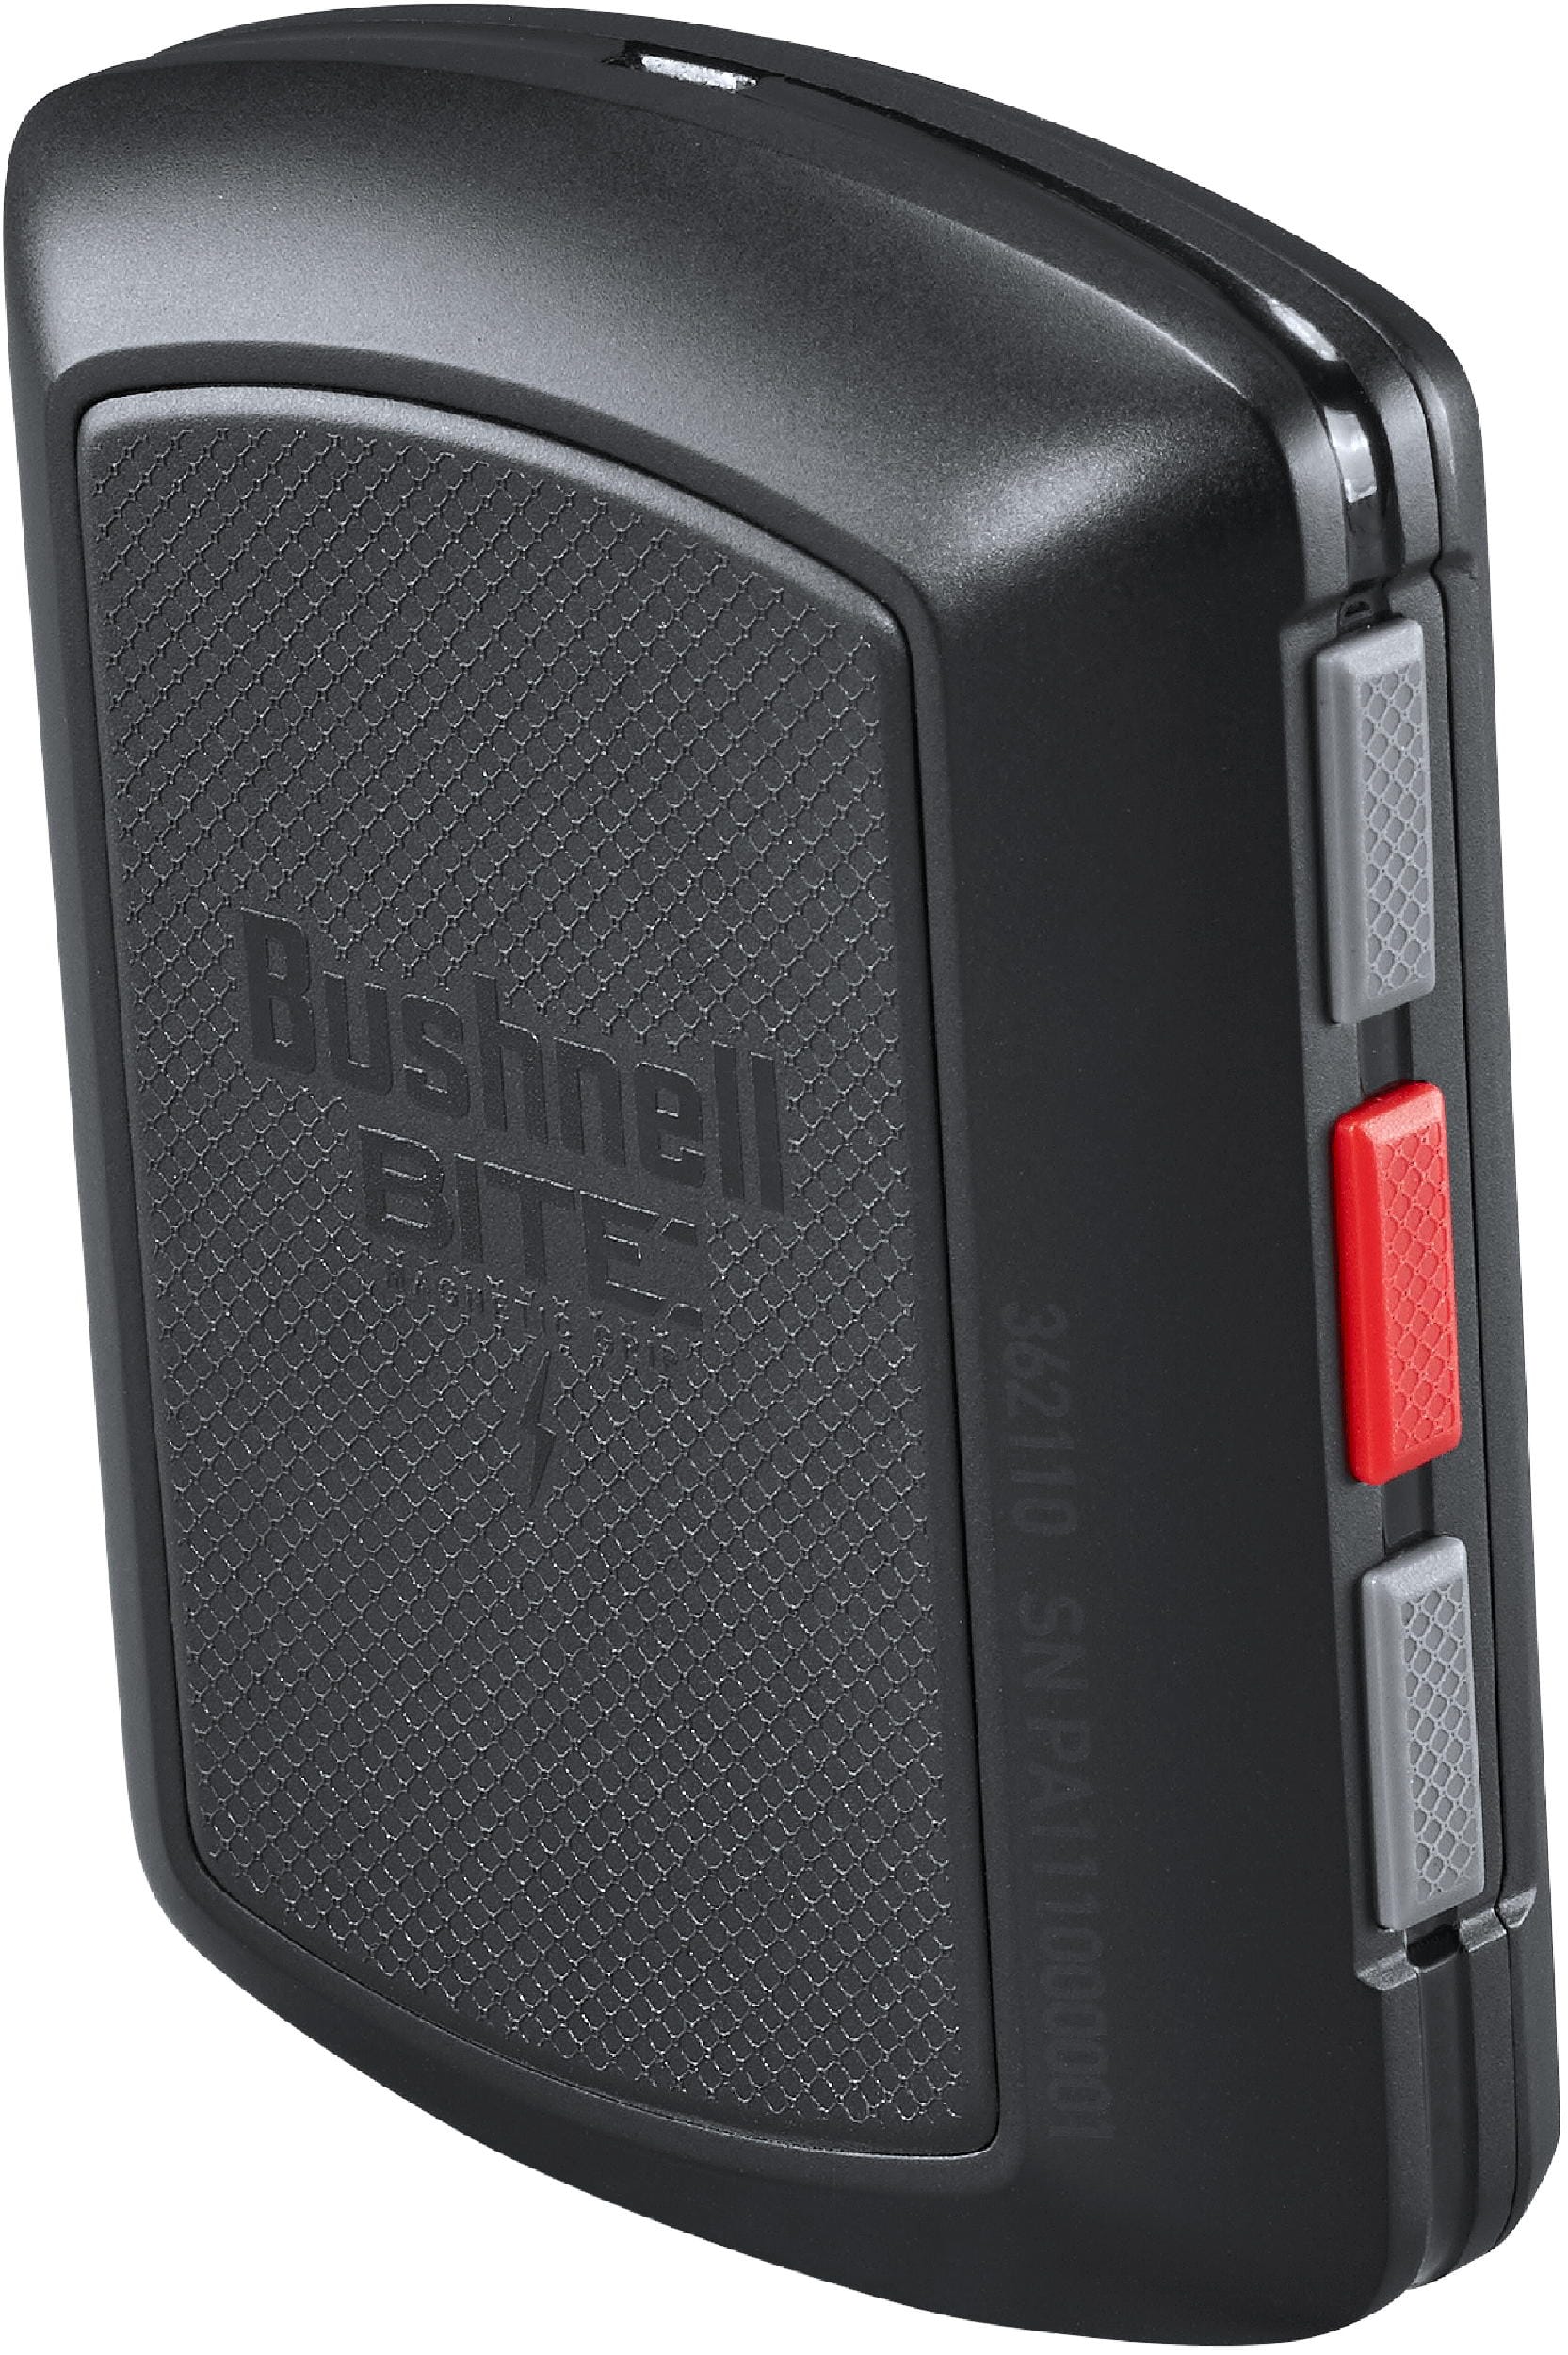 Bushnell Phantom 2 Golf GPS Handheld